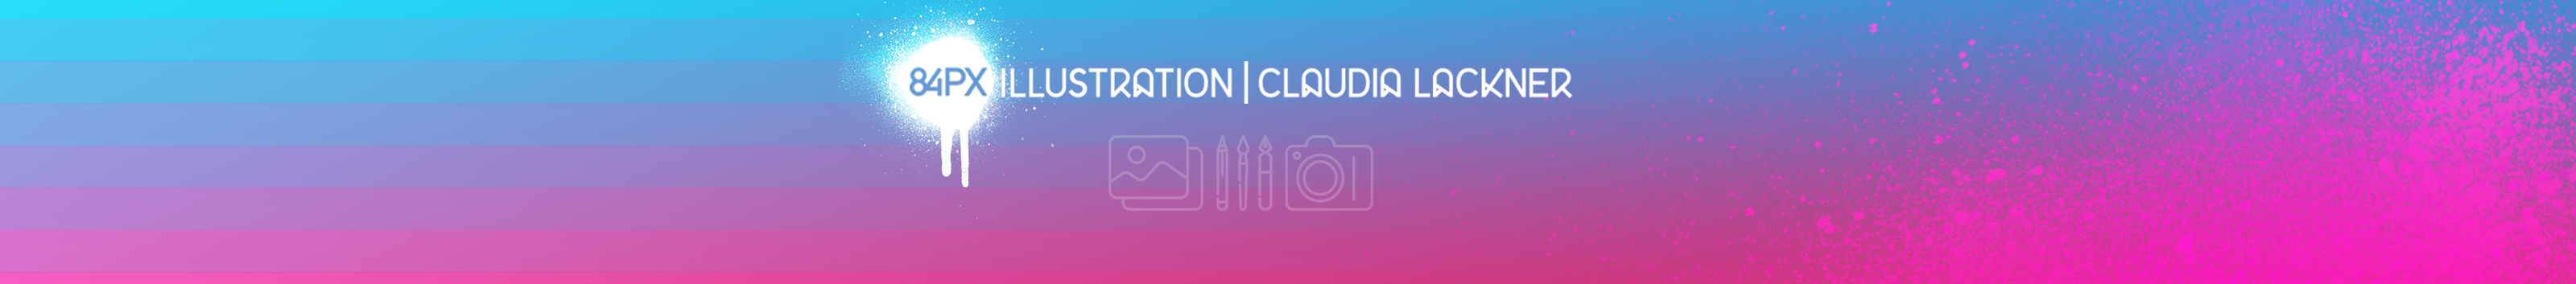 Claudia Lackner's profile banner